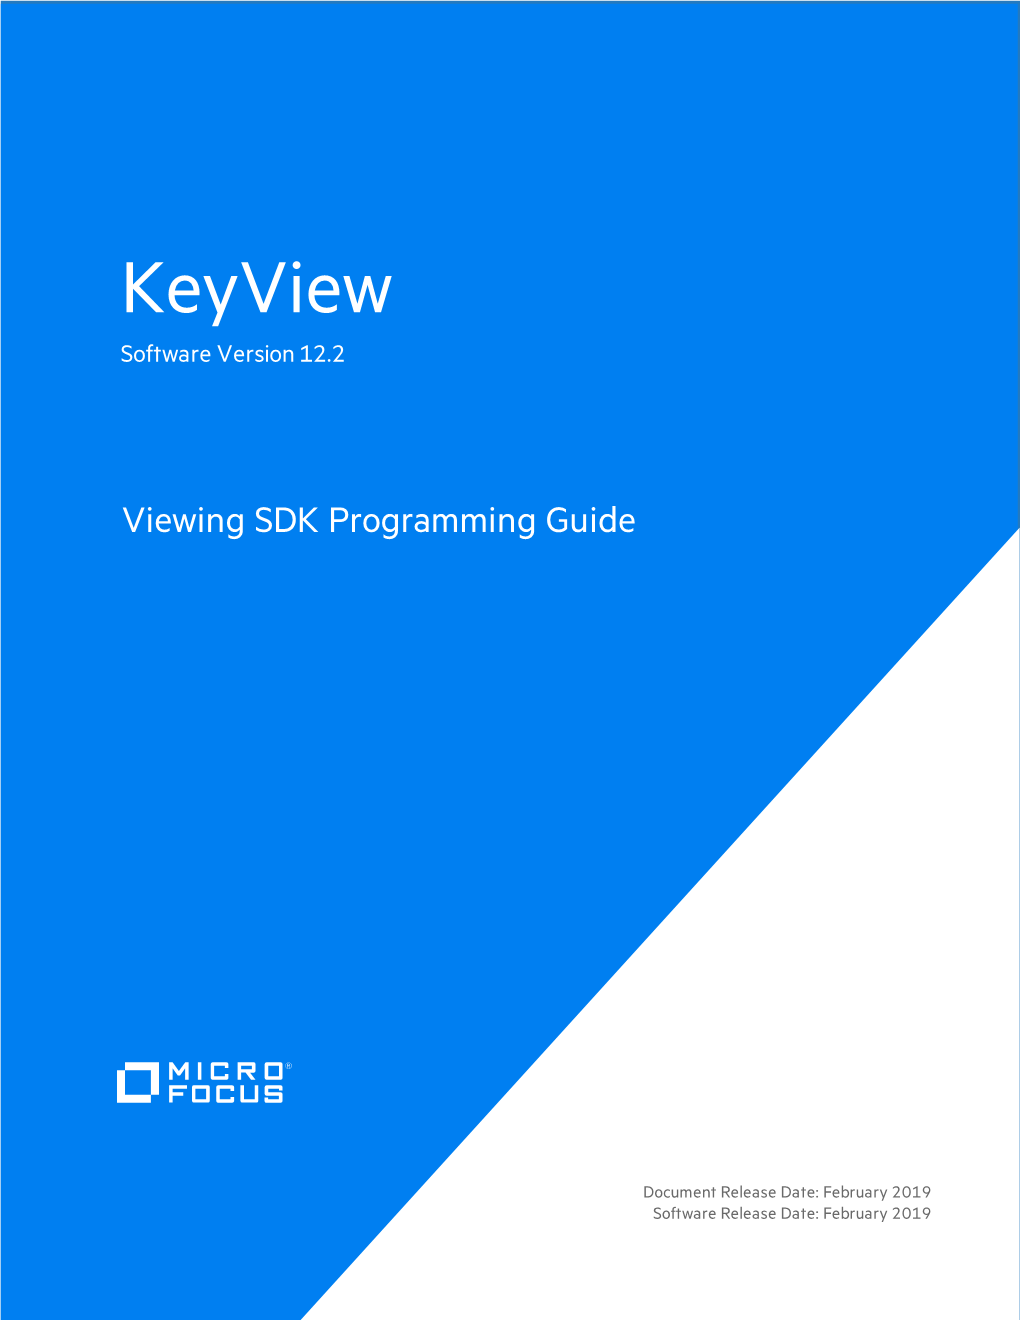 IDOL Keyview Viewing SDK 12.2 Programming Guide